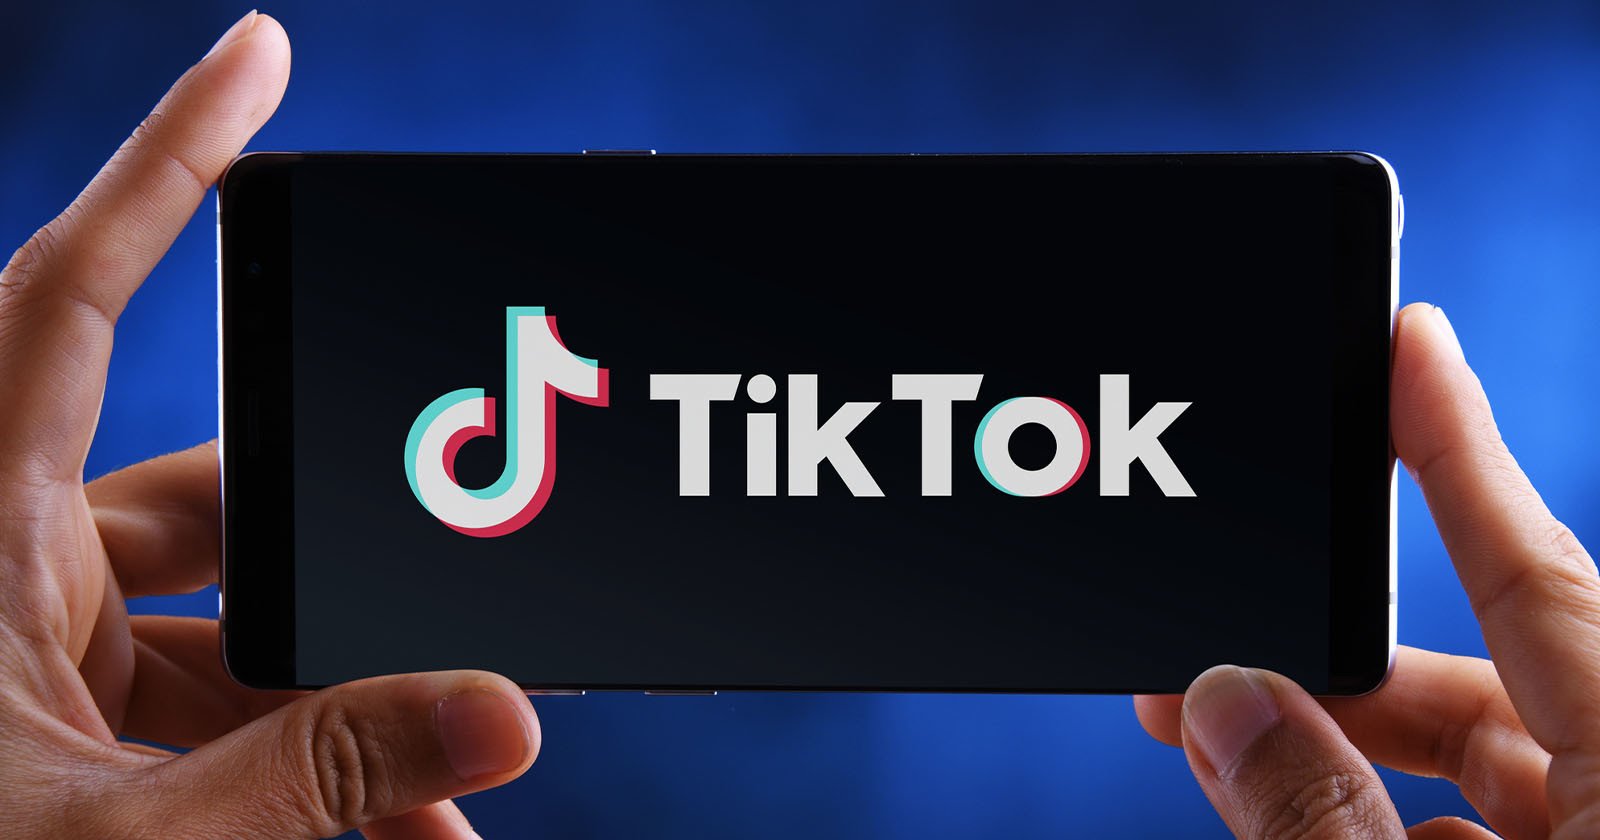  tiktok takes youtube testing full-screen landscape videos 